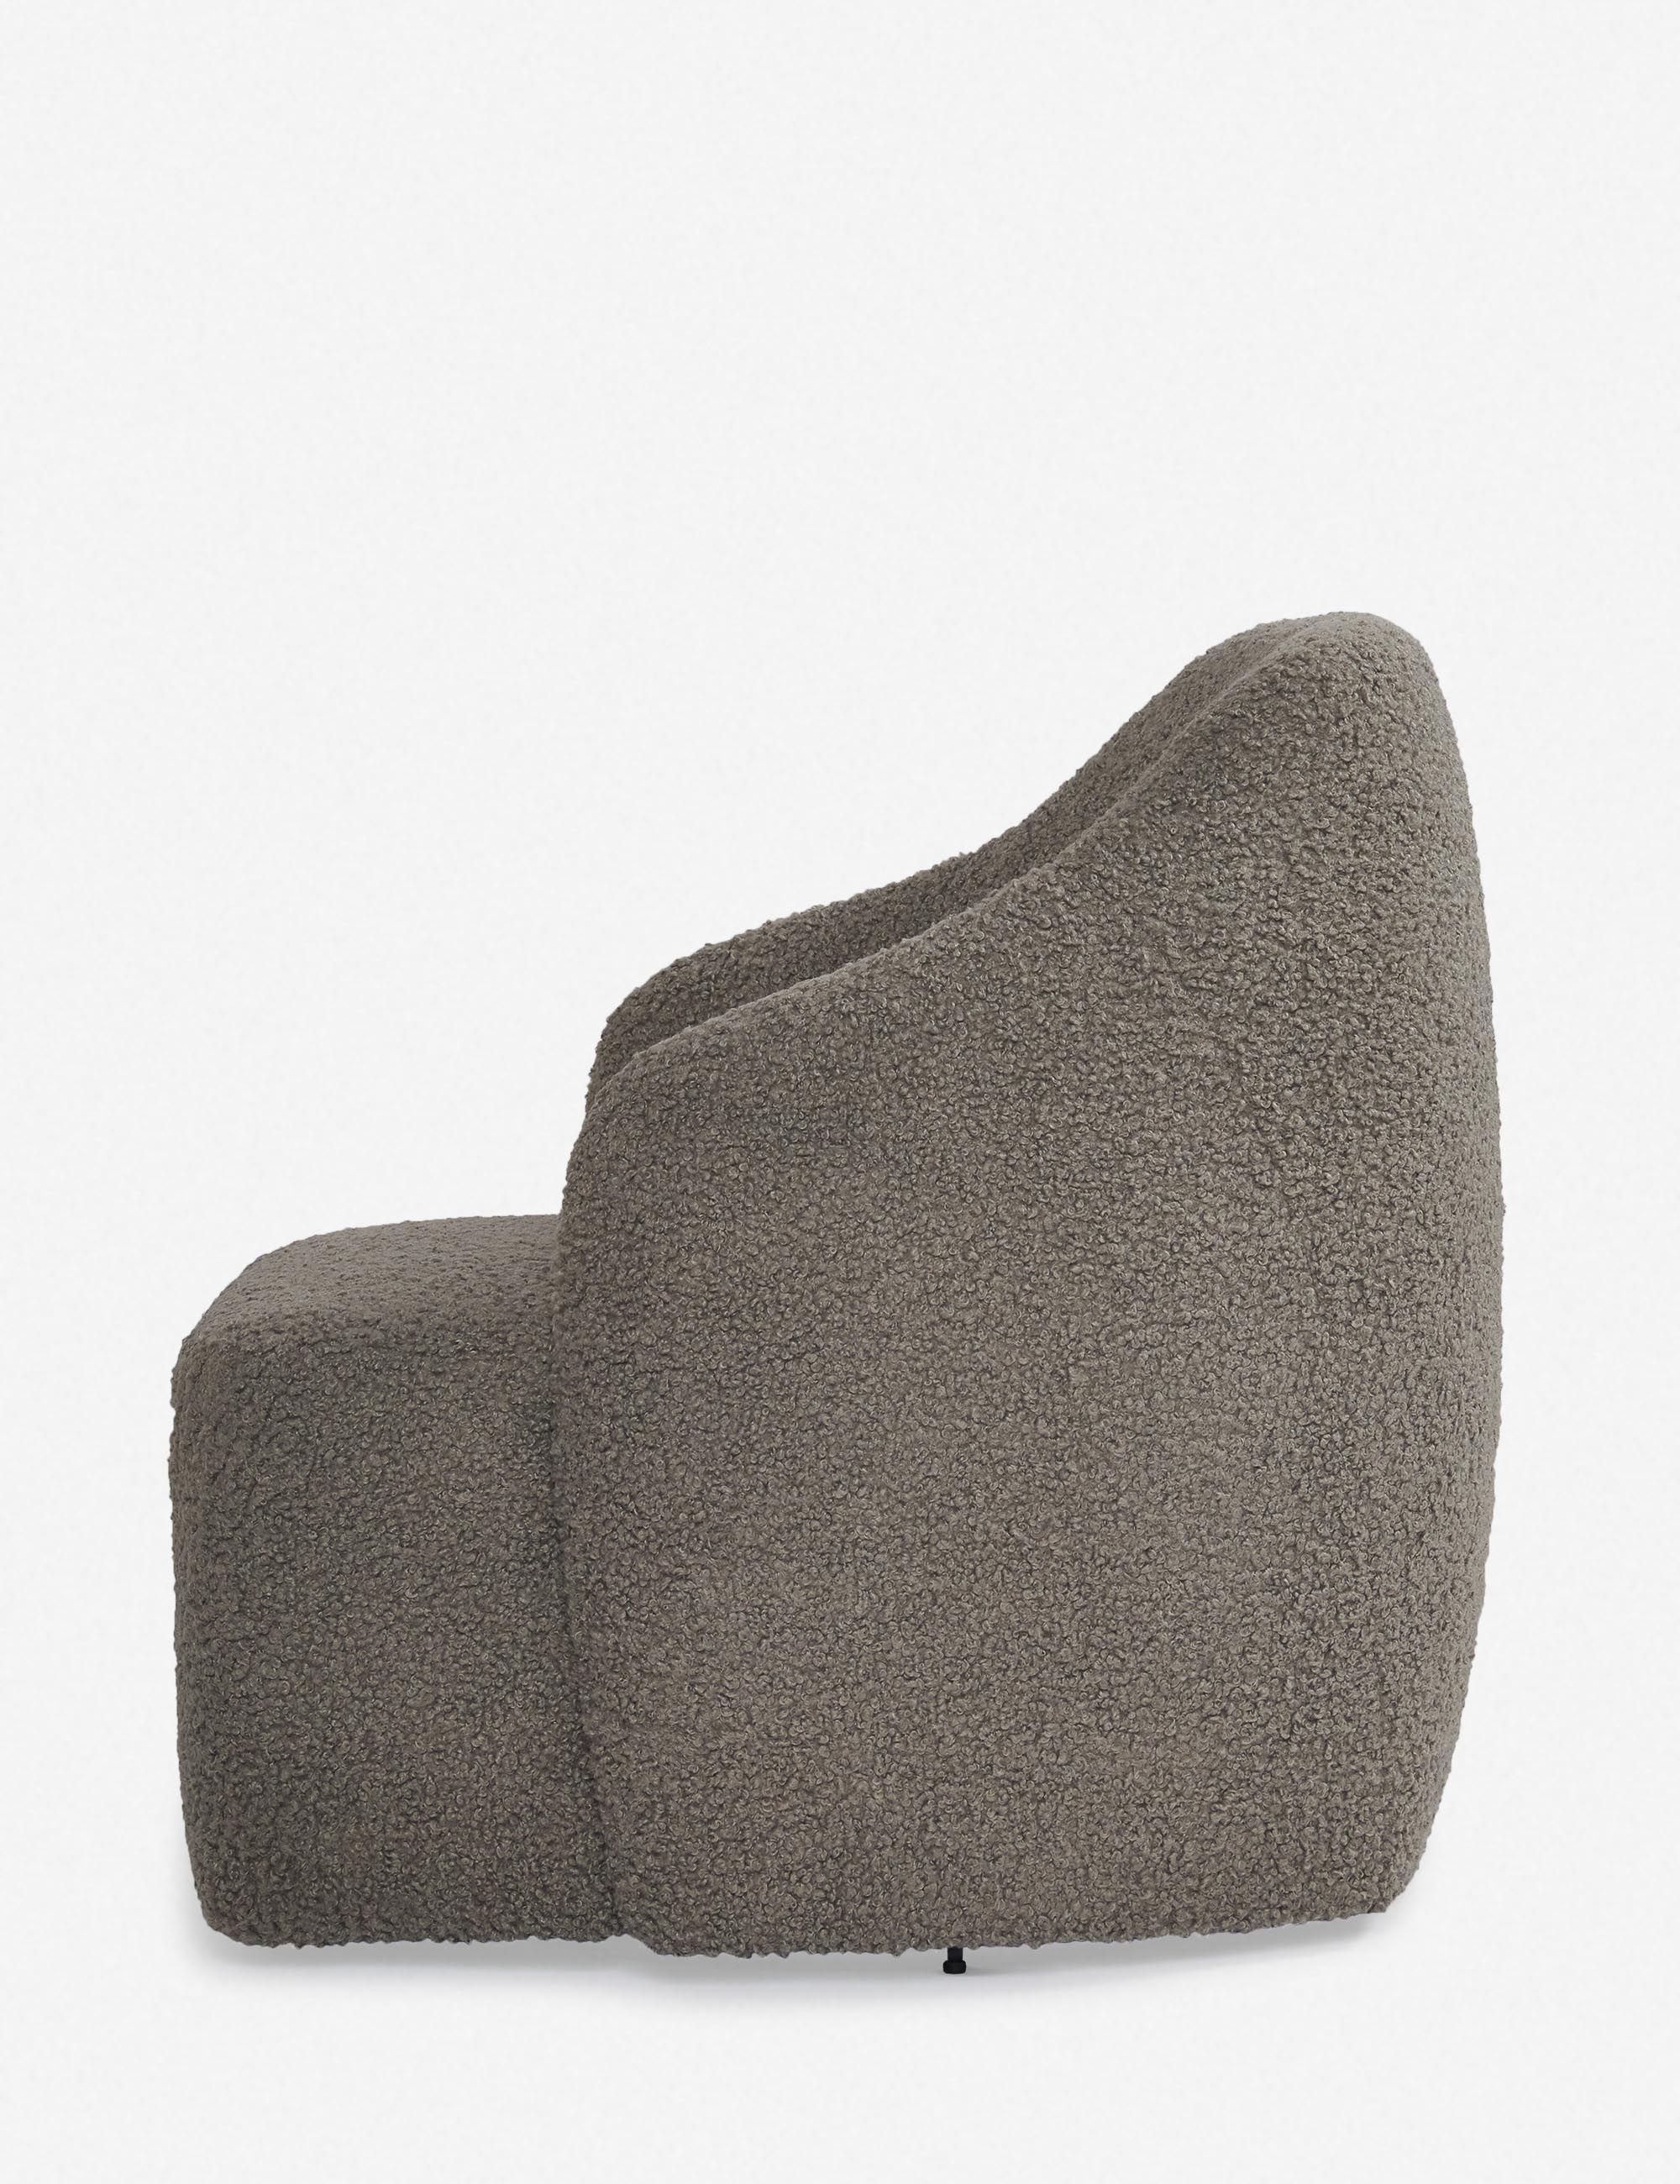 Tobi Swivel Chair - Image 9